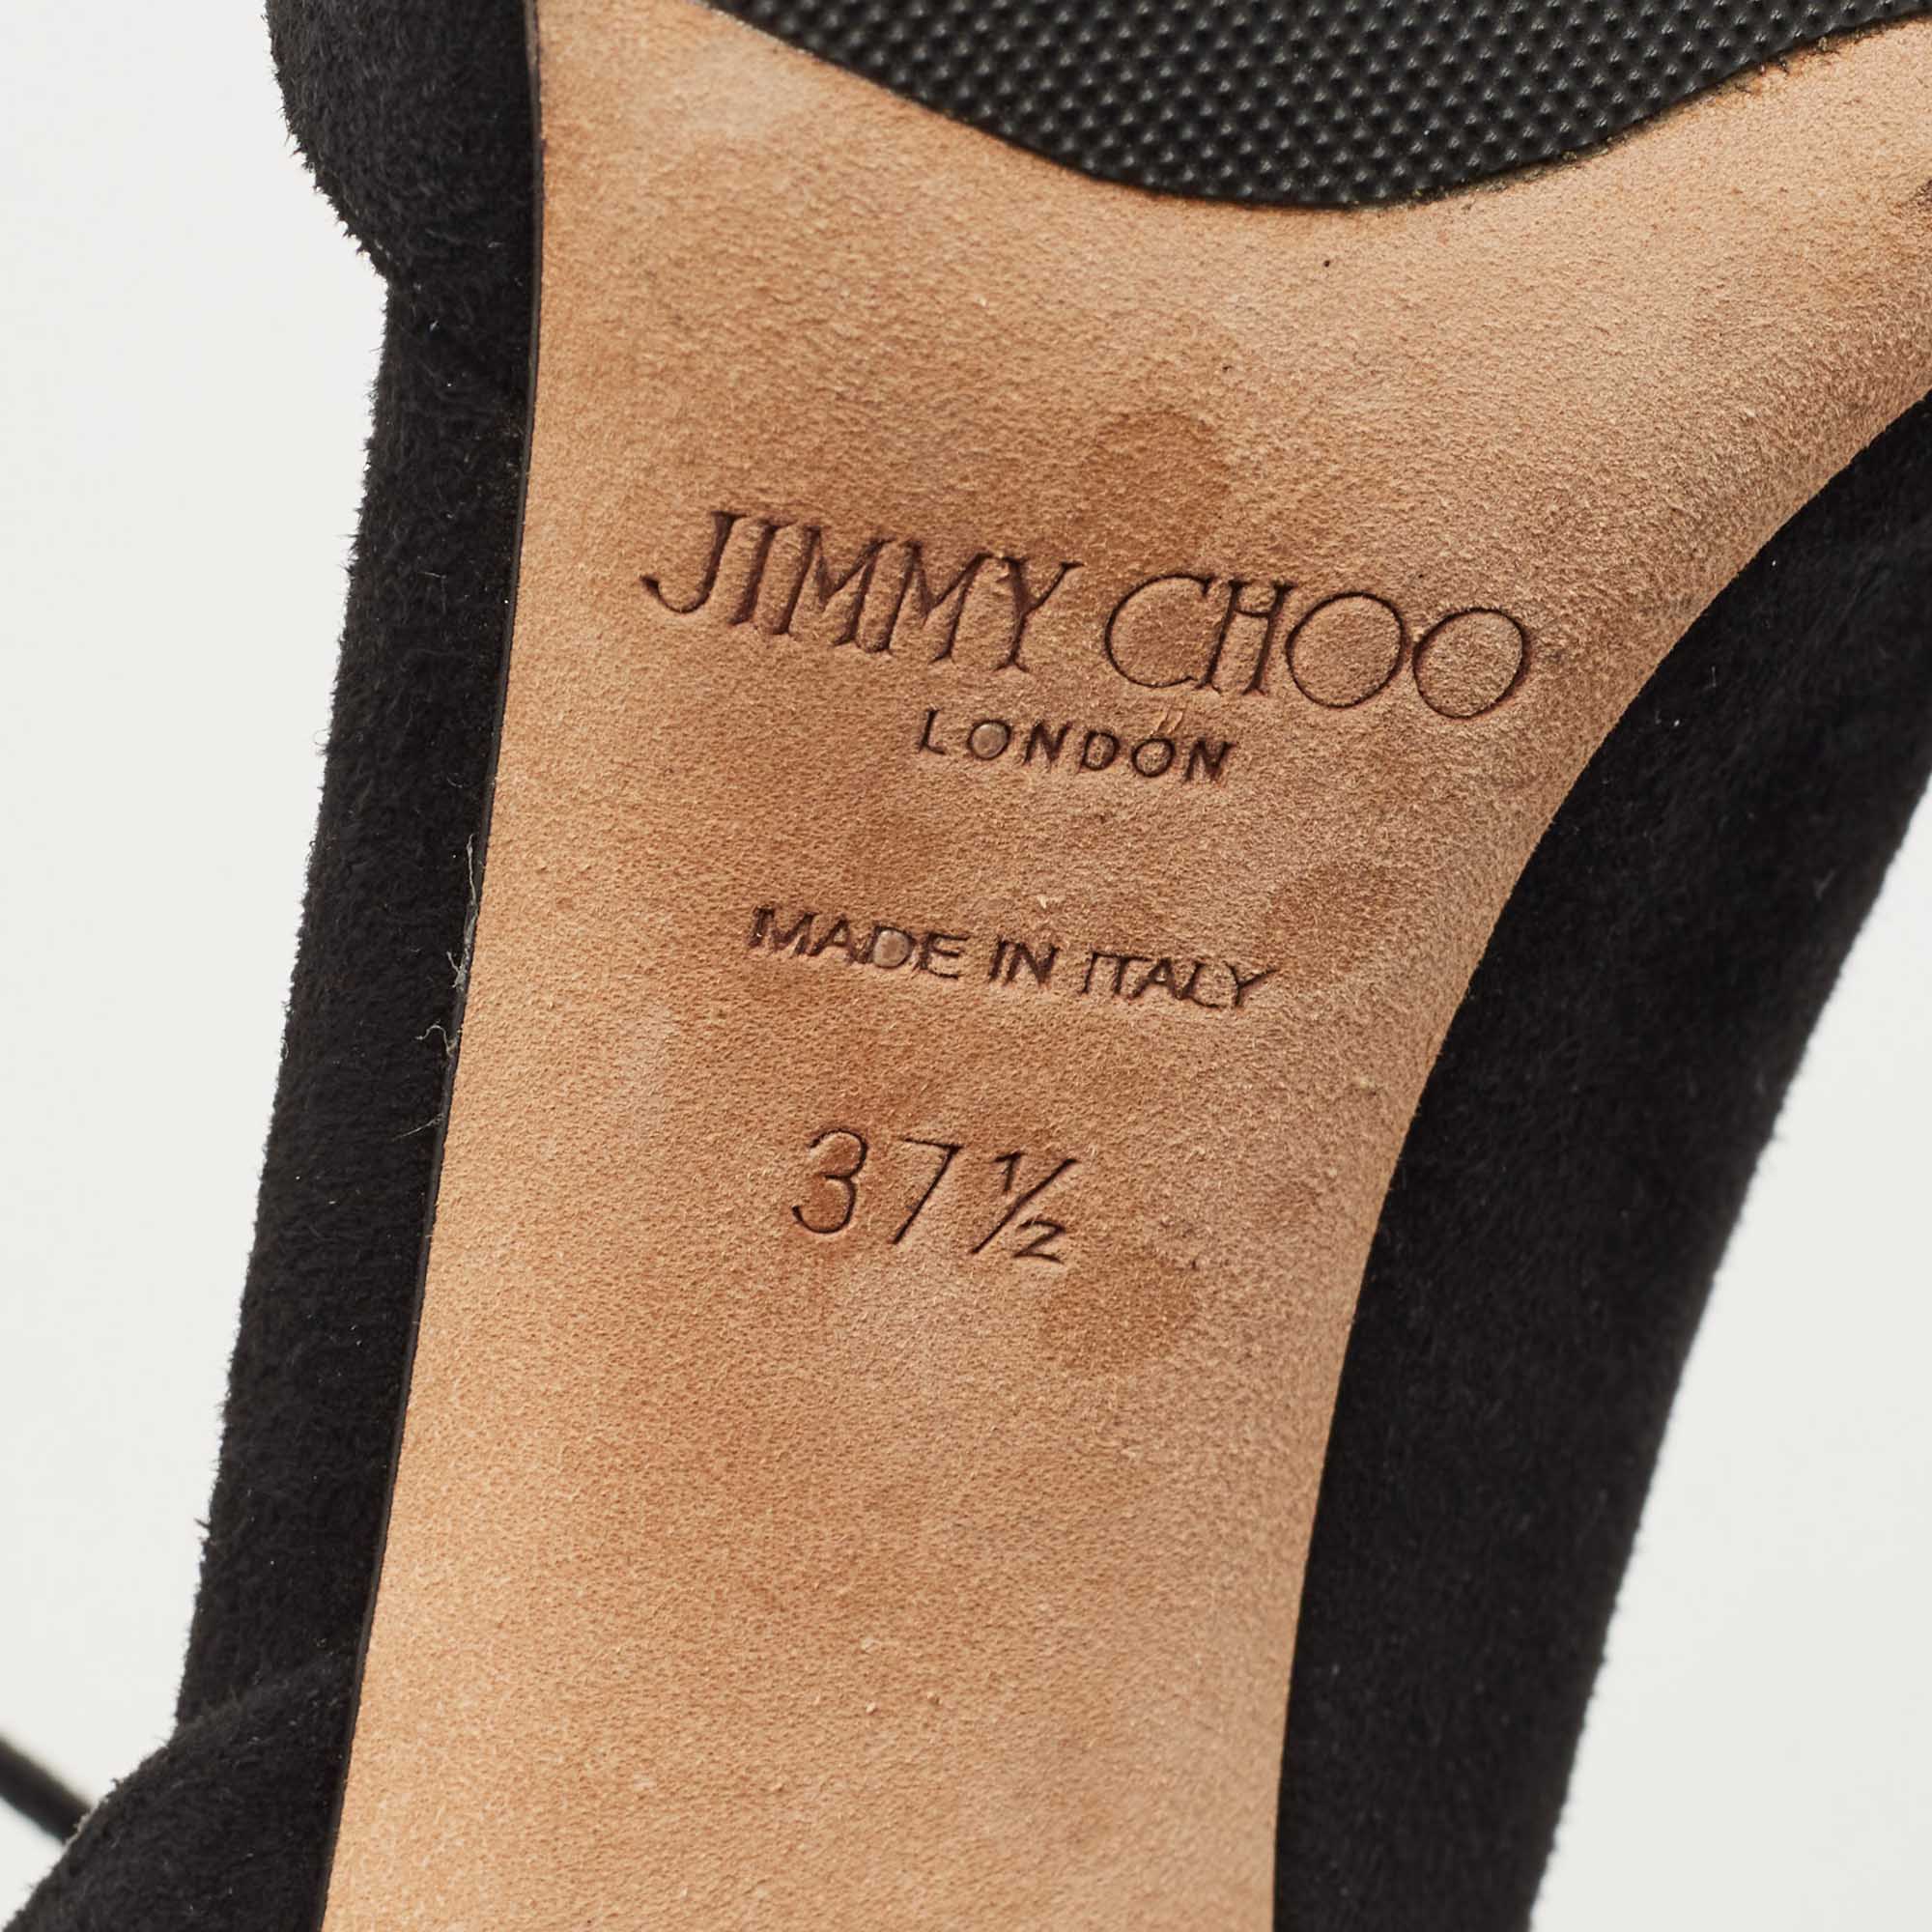 Jimmy Choo Black Suede Open Toe Ankle Strap Sandals Size 37.5